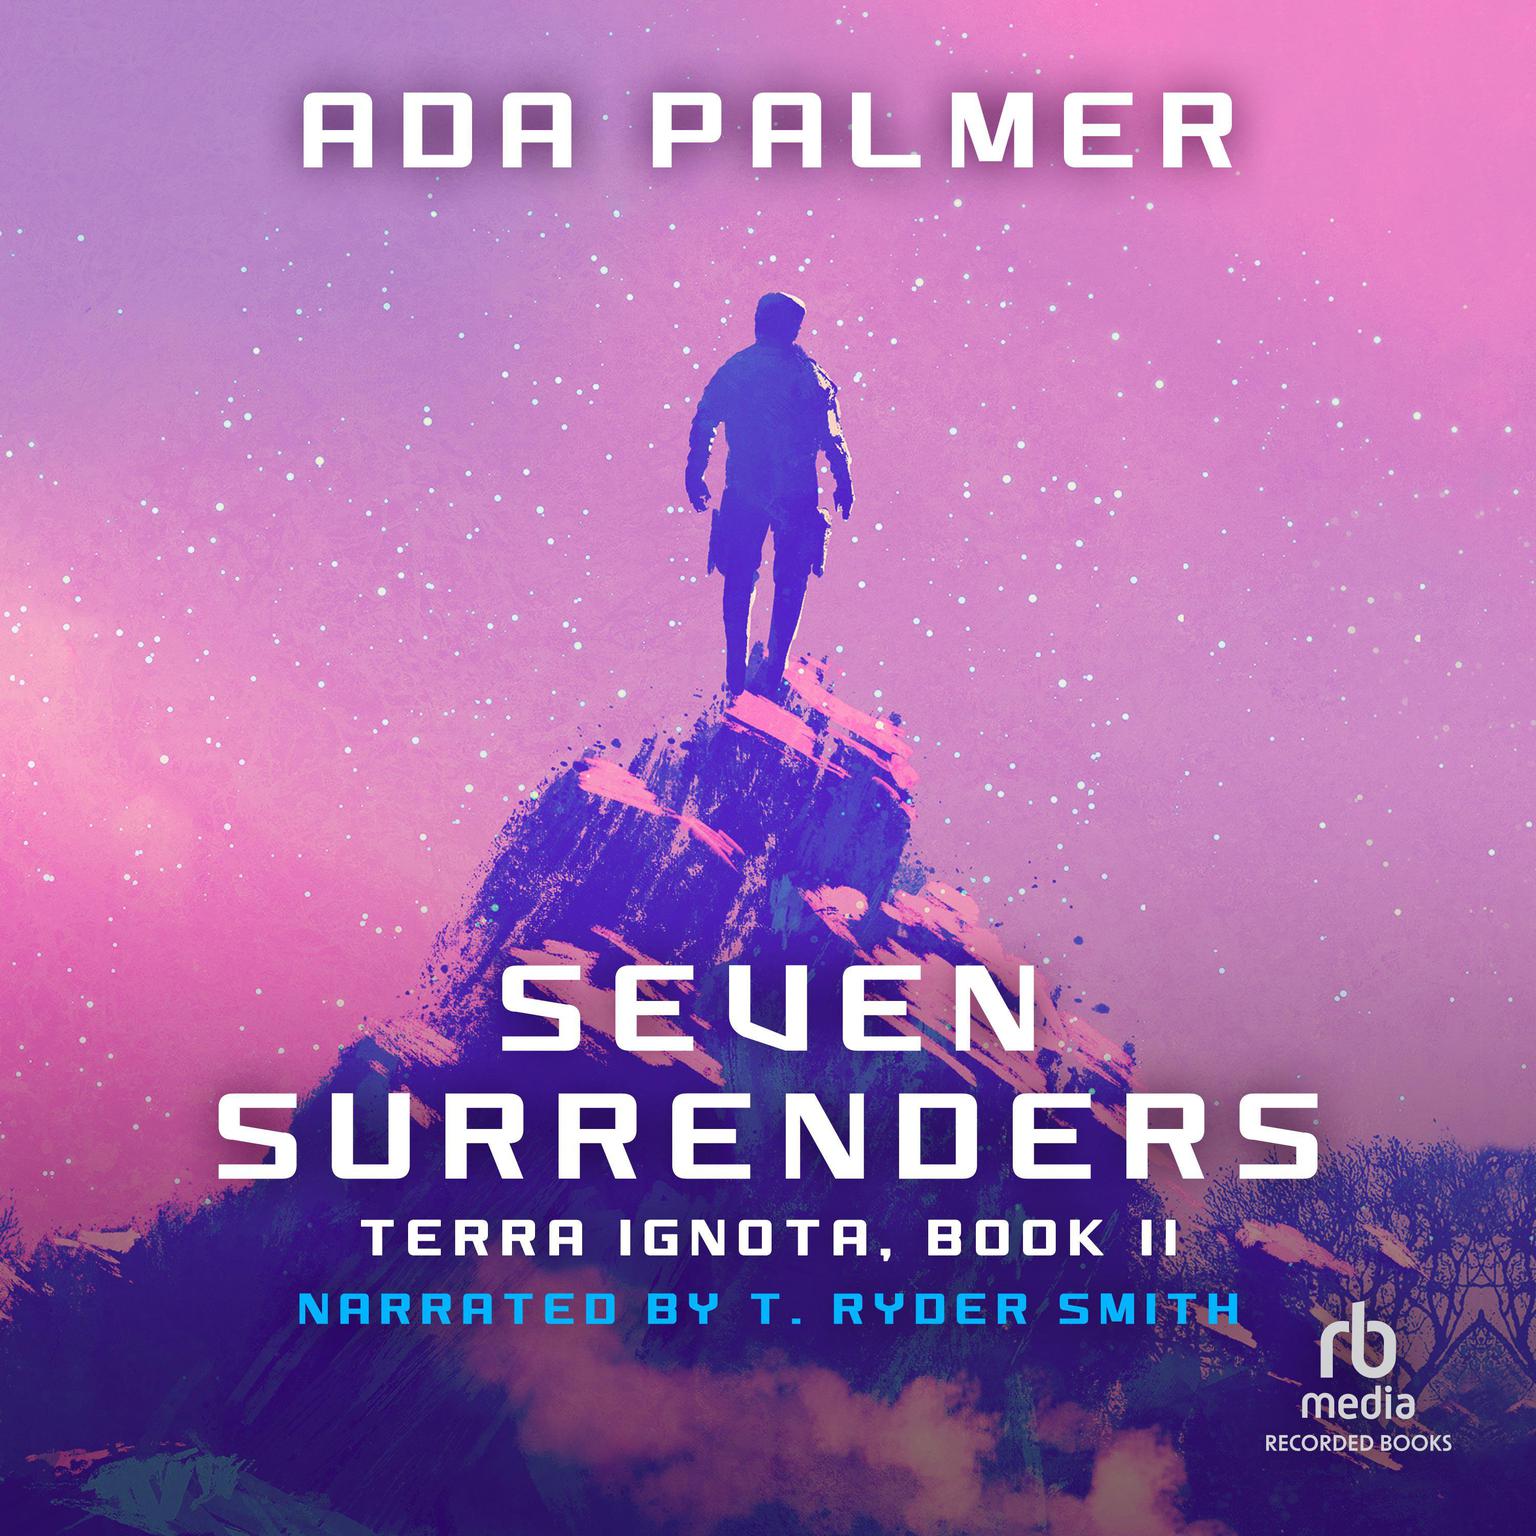 ada palmer seven surrenders